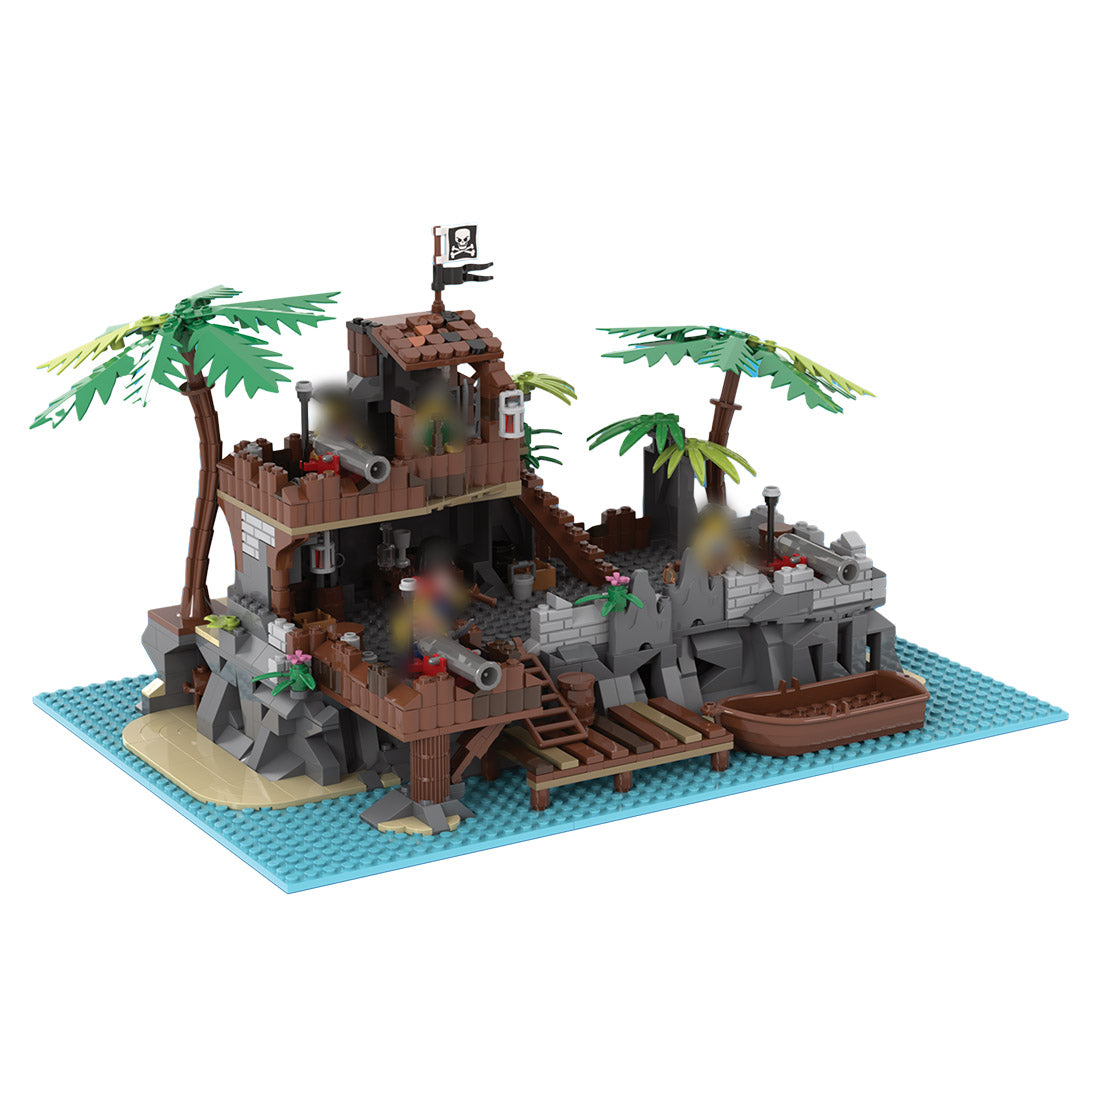 LEGO MOC Pirate Fortress by JonnyBricksmith